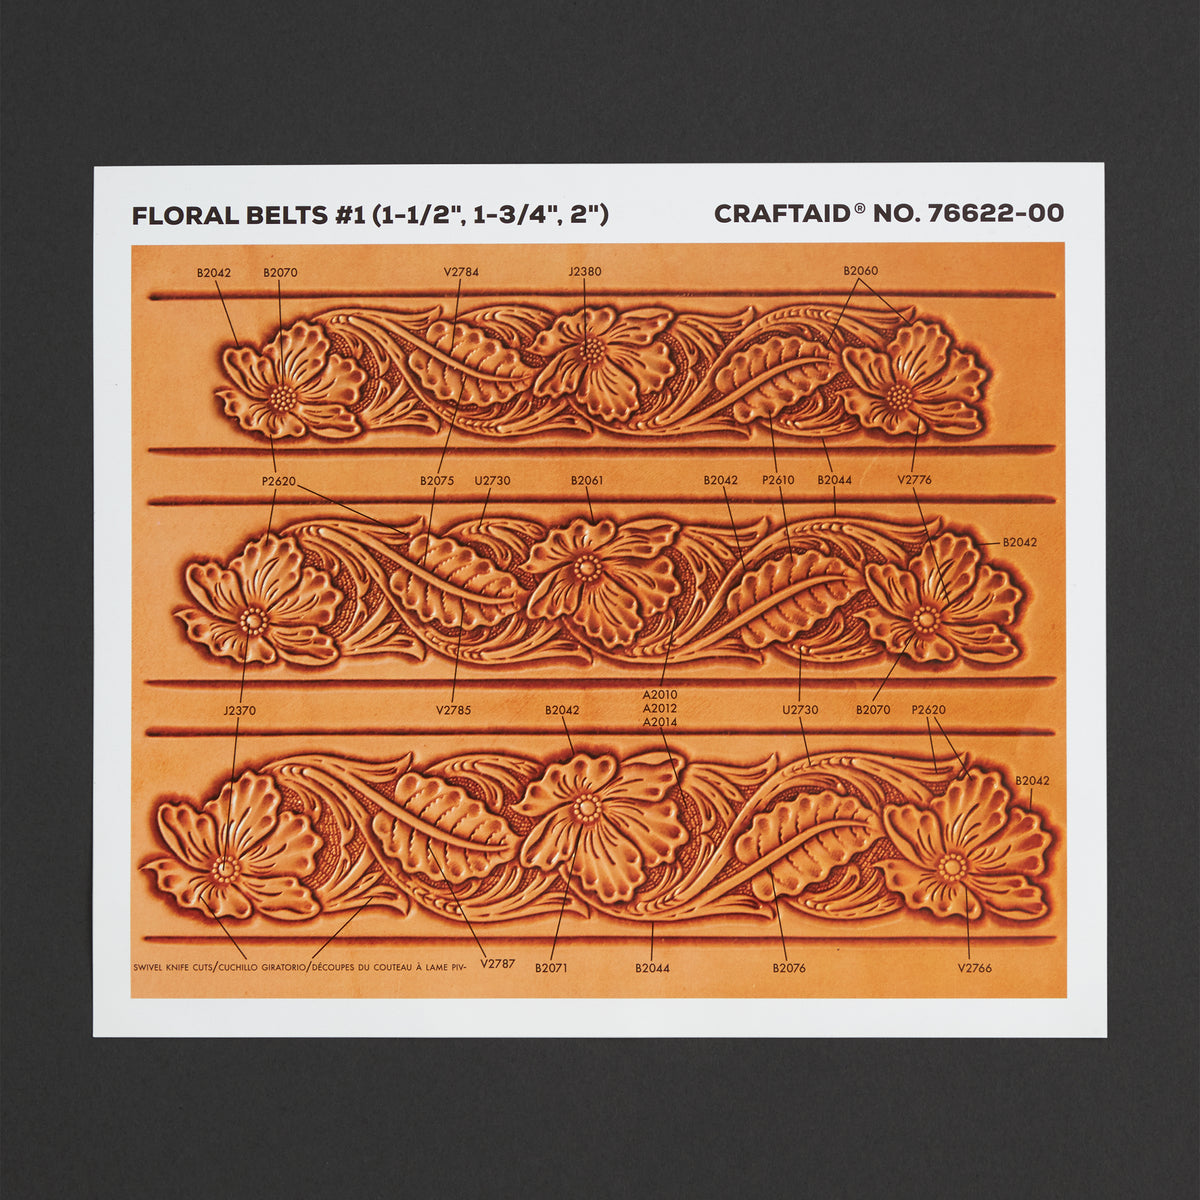 Celtic Belt & Buckle Craftaid® — Tandy Leather International